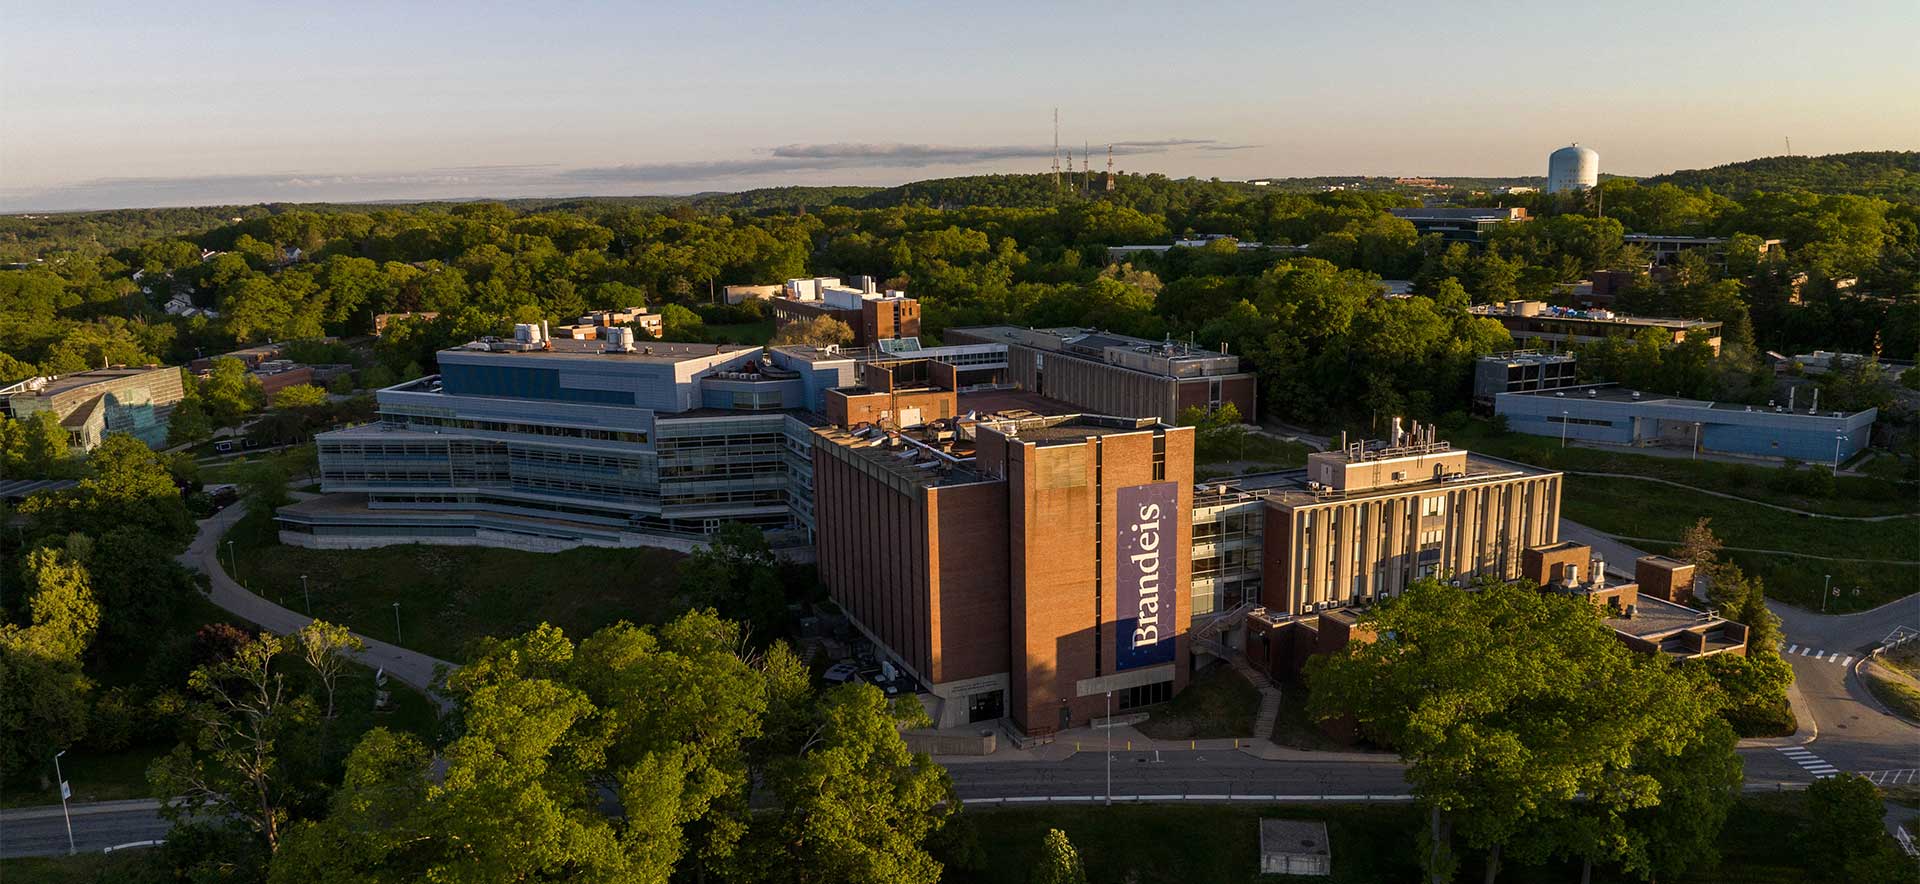 Aerial view of Brandeis campus